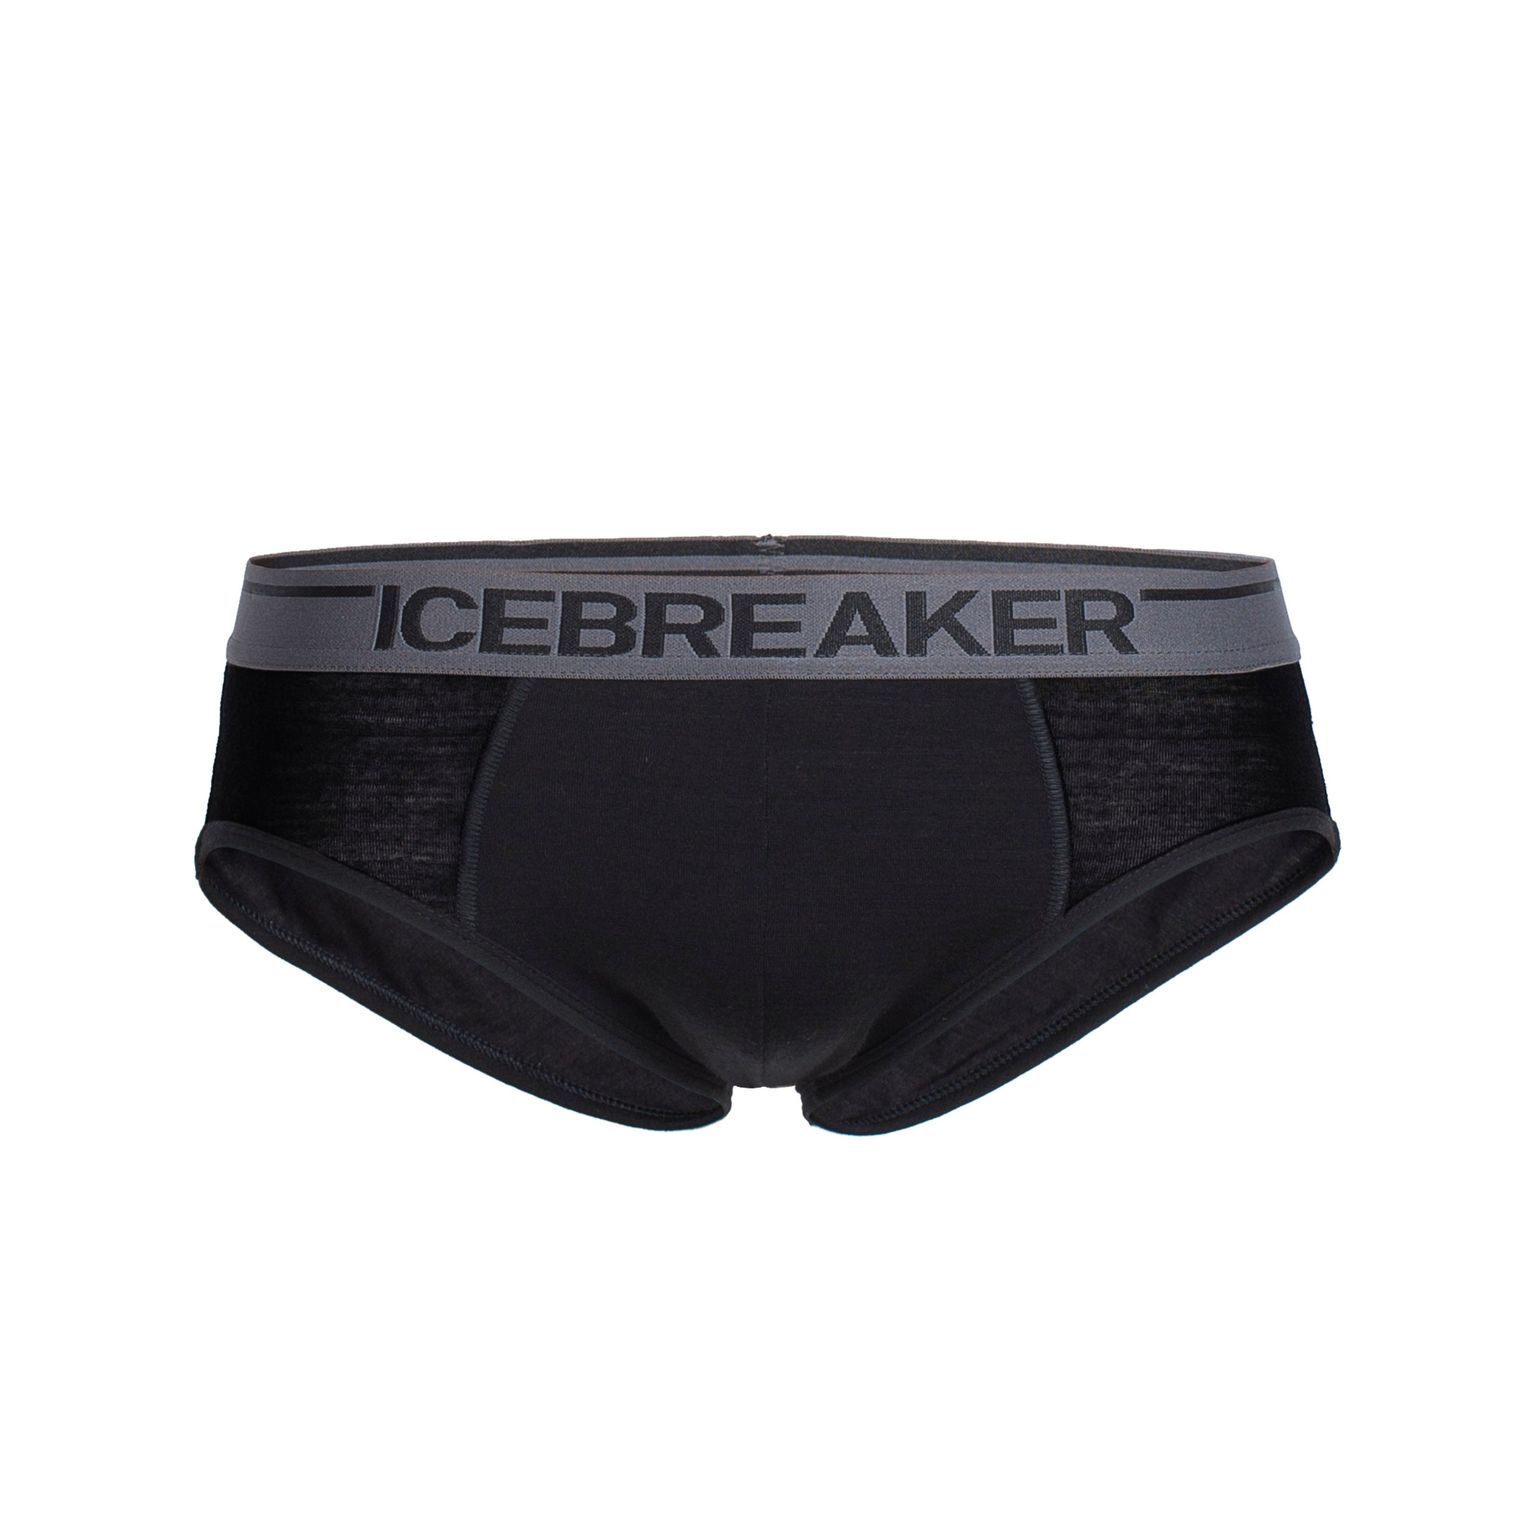 Icebreaker Men's Anatomica Briefs Black